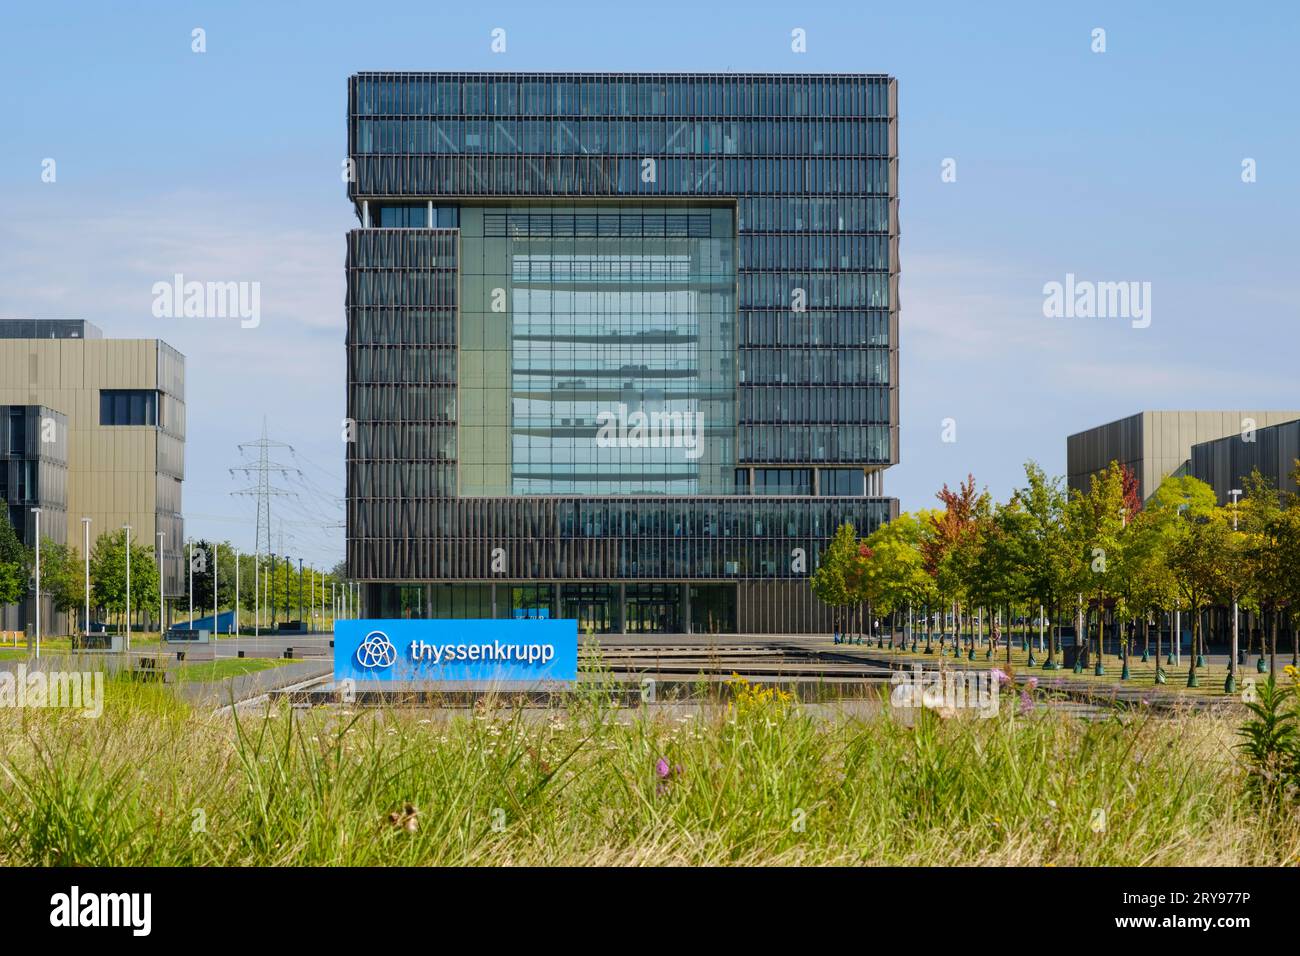 Corporate headquarters thyssenkrupp, headquarters, Ruhr tech kampus Essen, Essen, Ruhr area, North Rhine-Westphalia, Germany Stock Photo